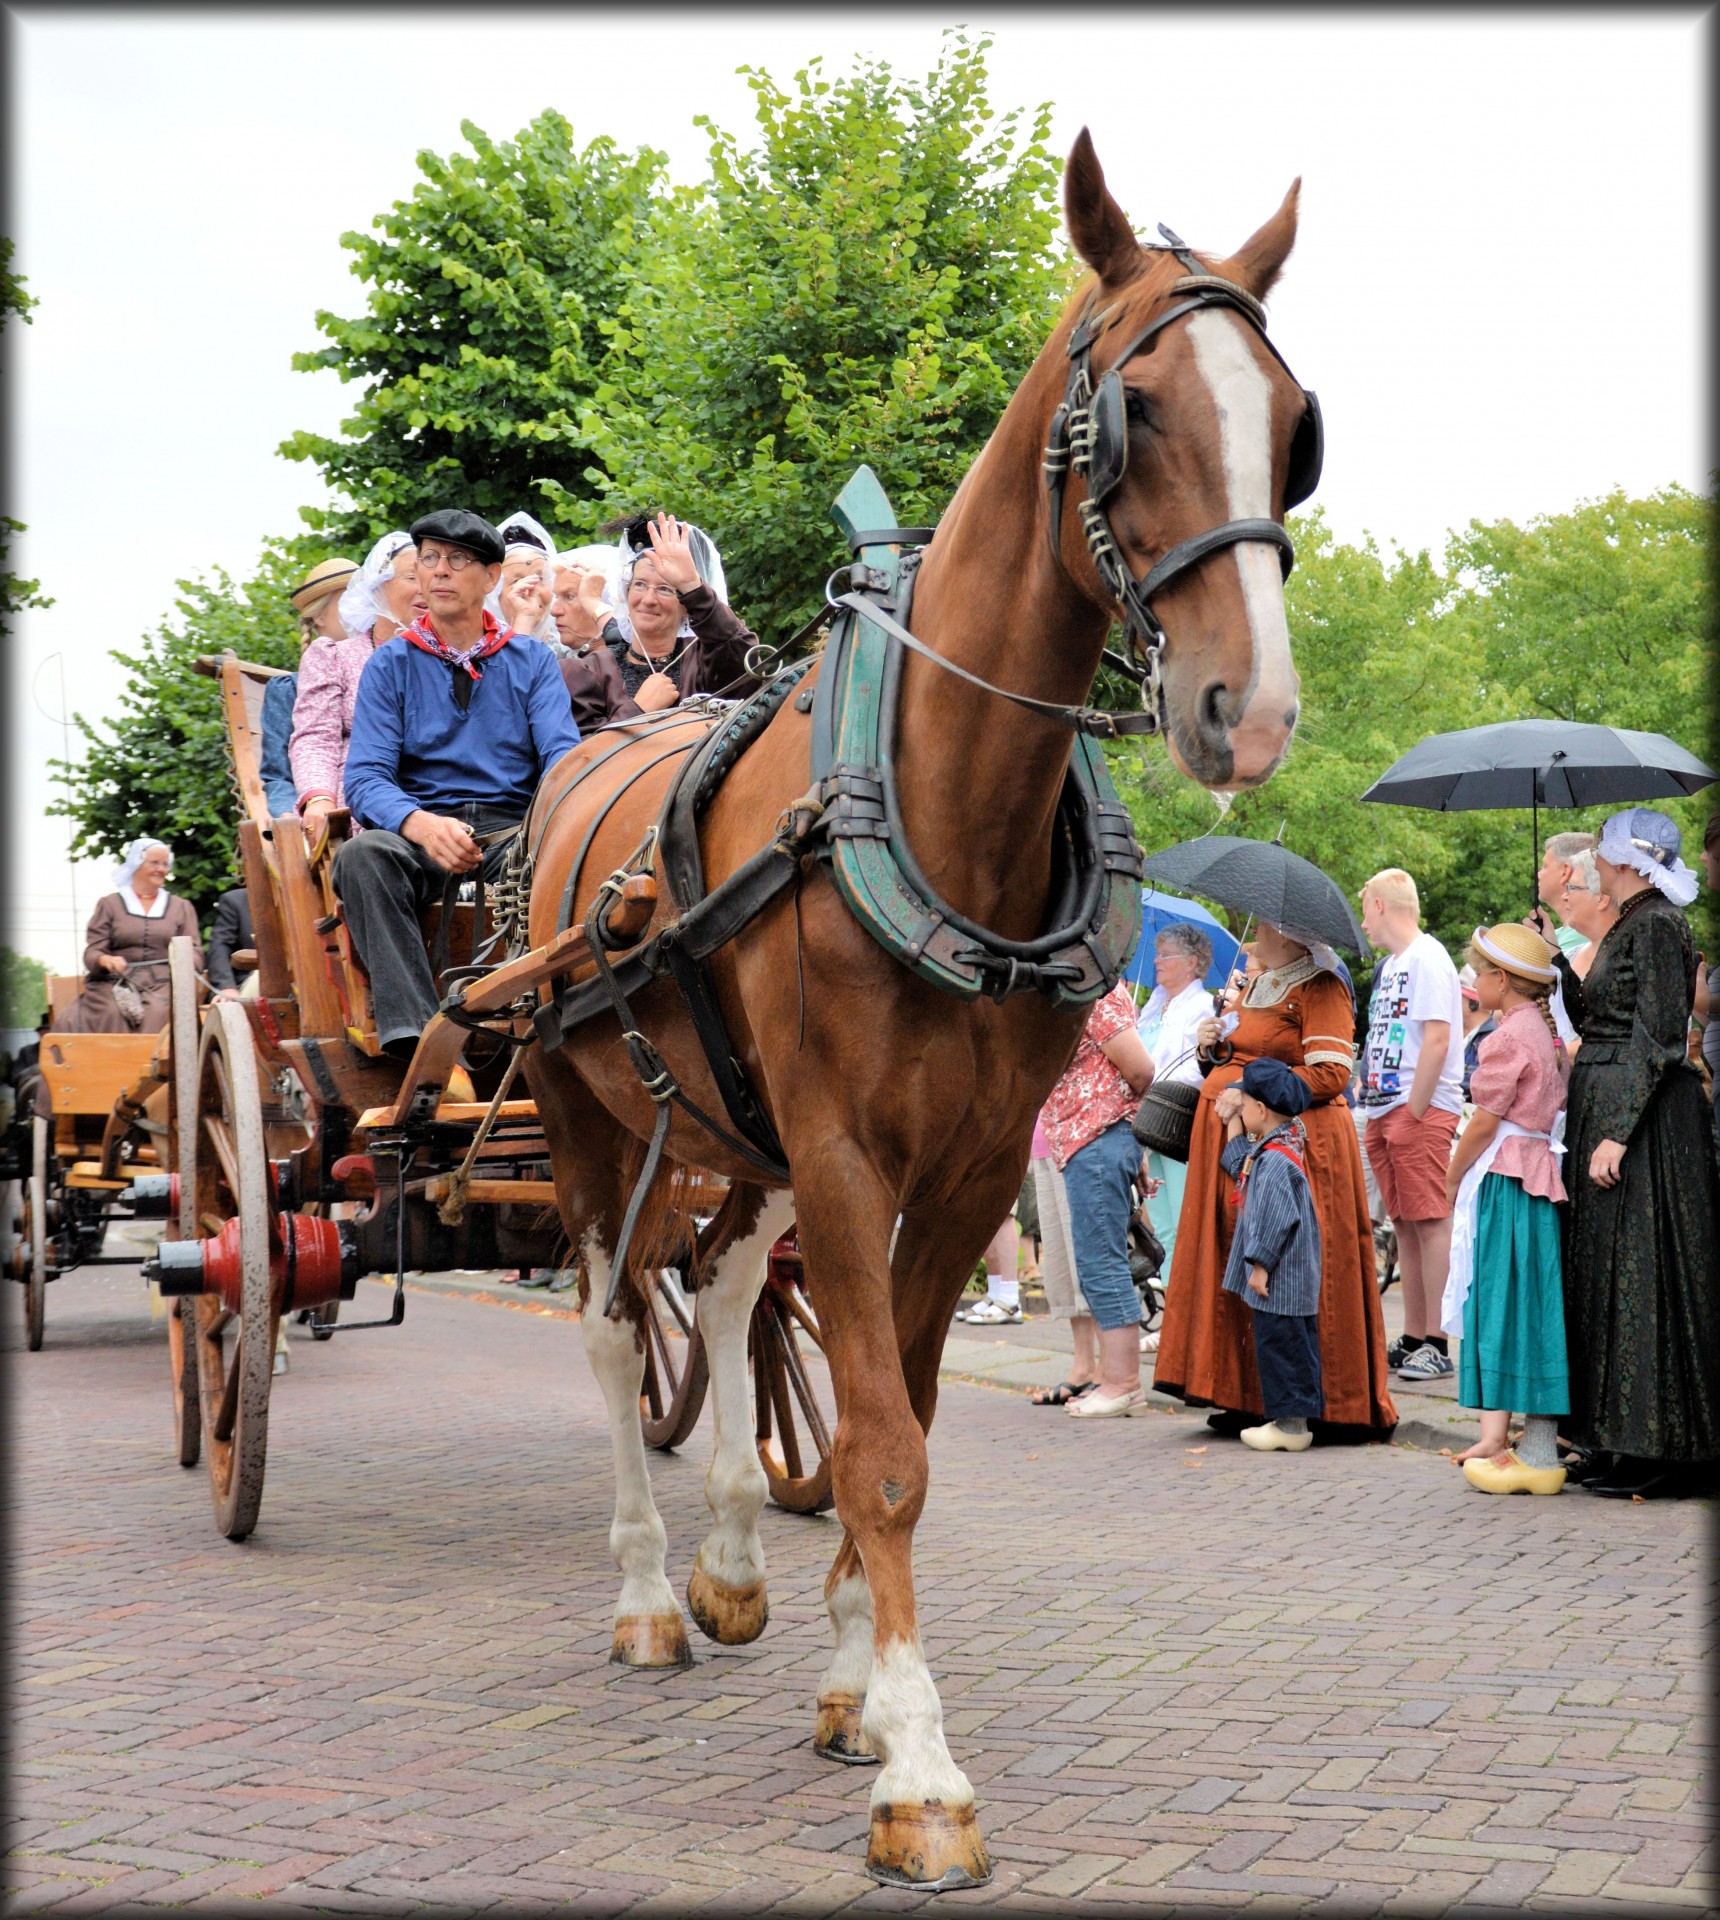 Dutch Authentic Carriages 03 Free Stock Photo - Public Domain Pictures